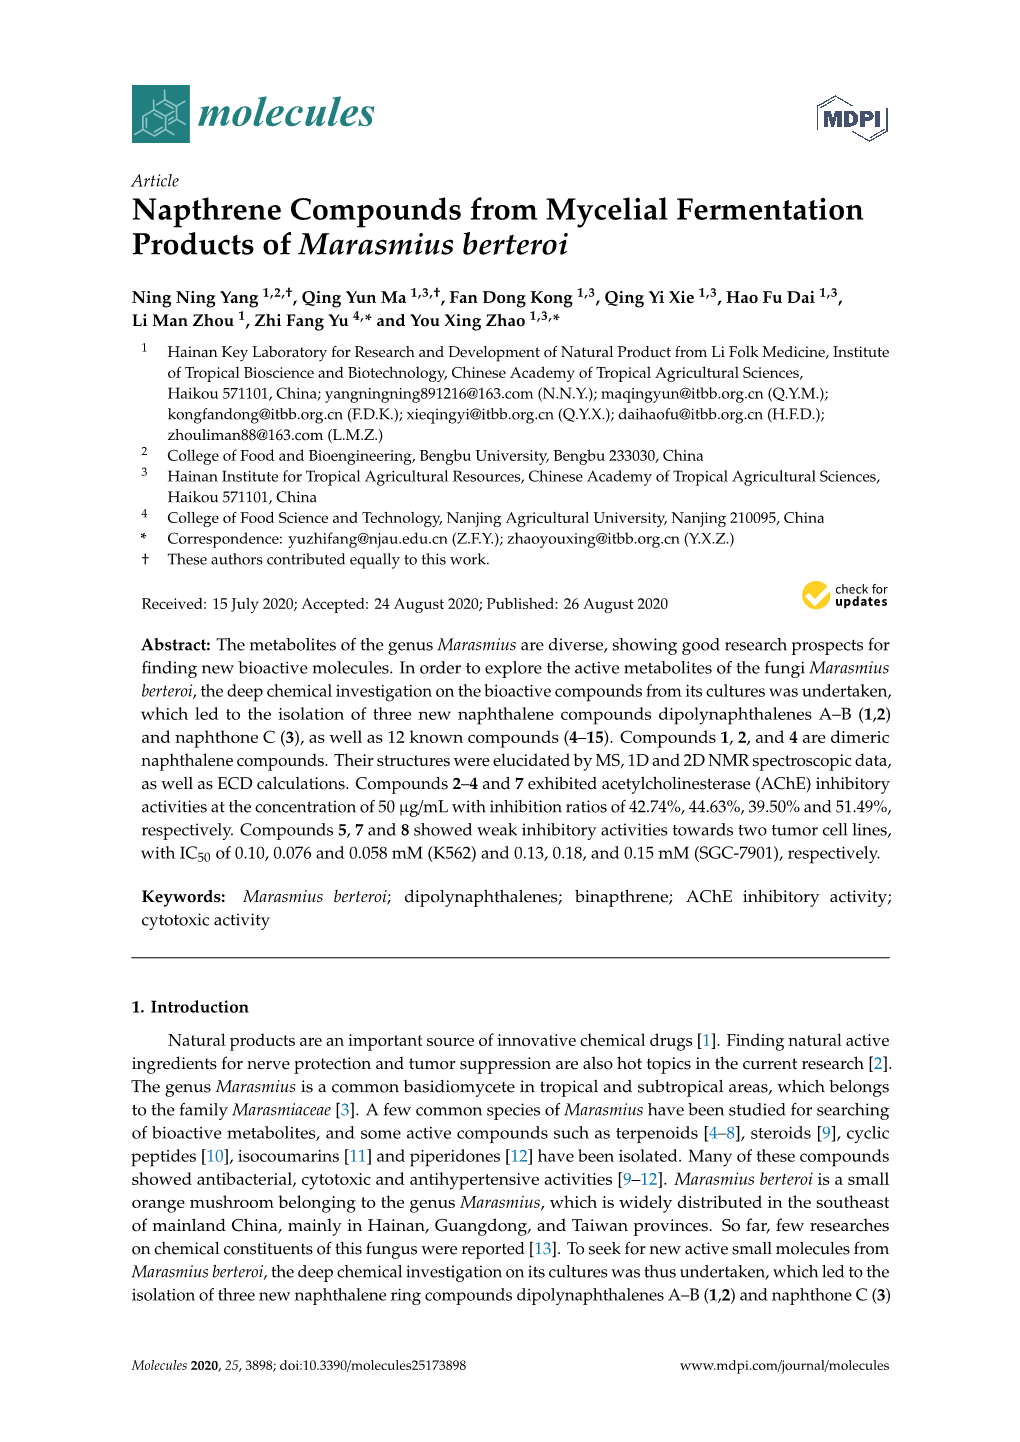 Napthrene Compounds from Mycelial Fermentation Products of Marasmius Berteroi